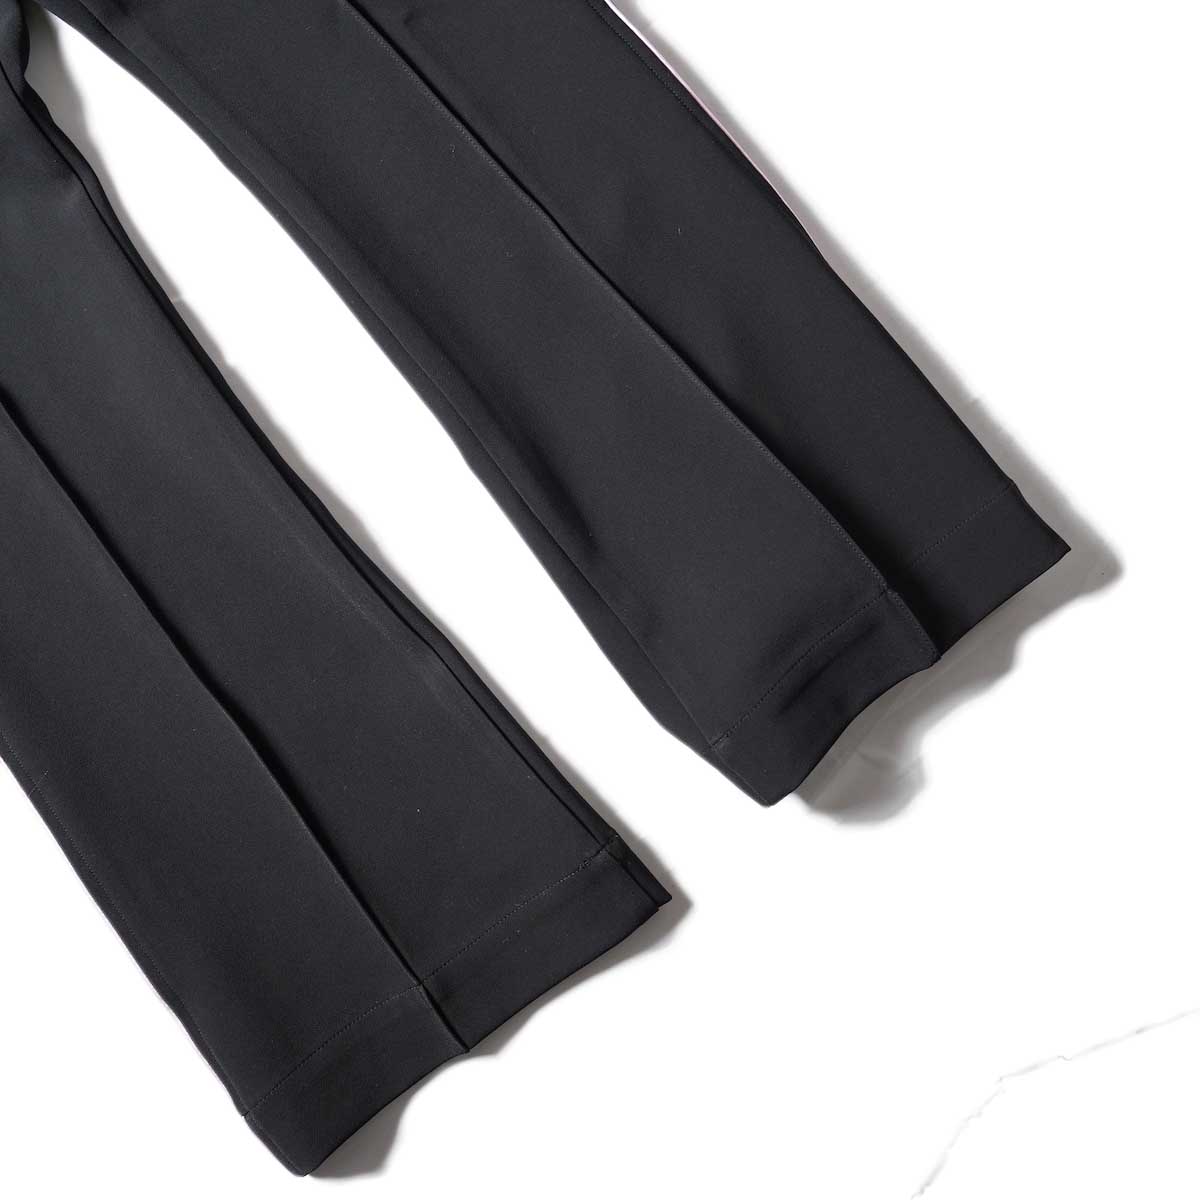 Needles / PIPING COWBOY PANT - PE/PU DOUBLE CLOTH (Black)裾